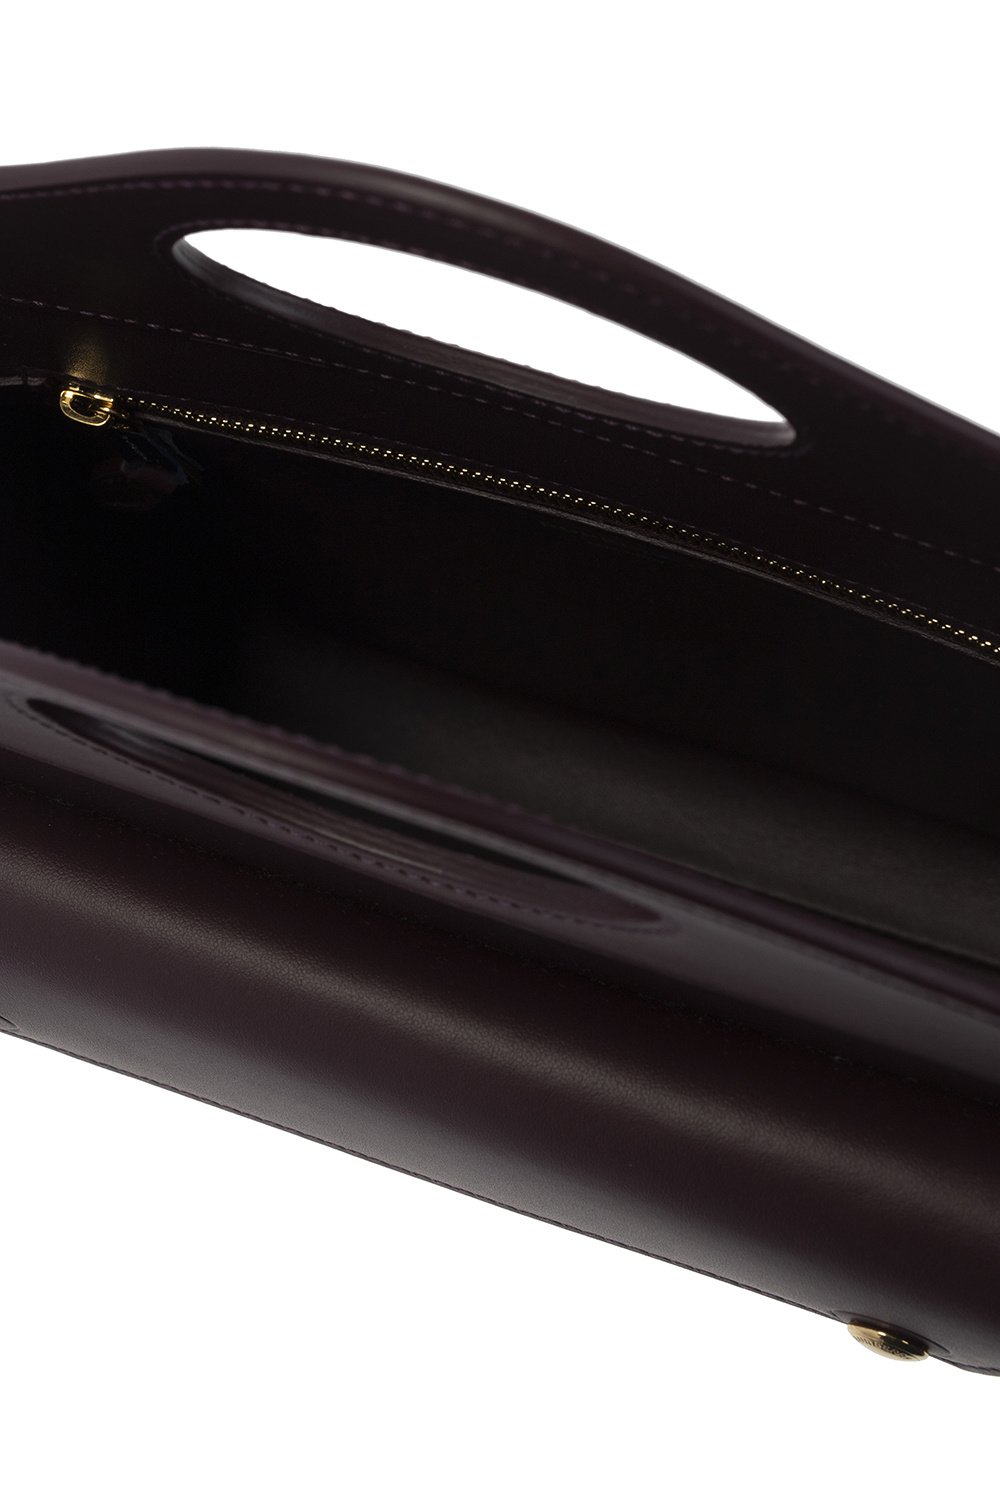 Burberry ‘Mini Pocket’ handbag